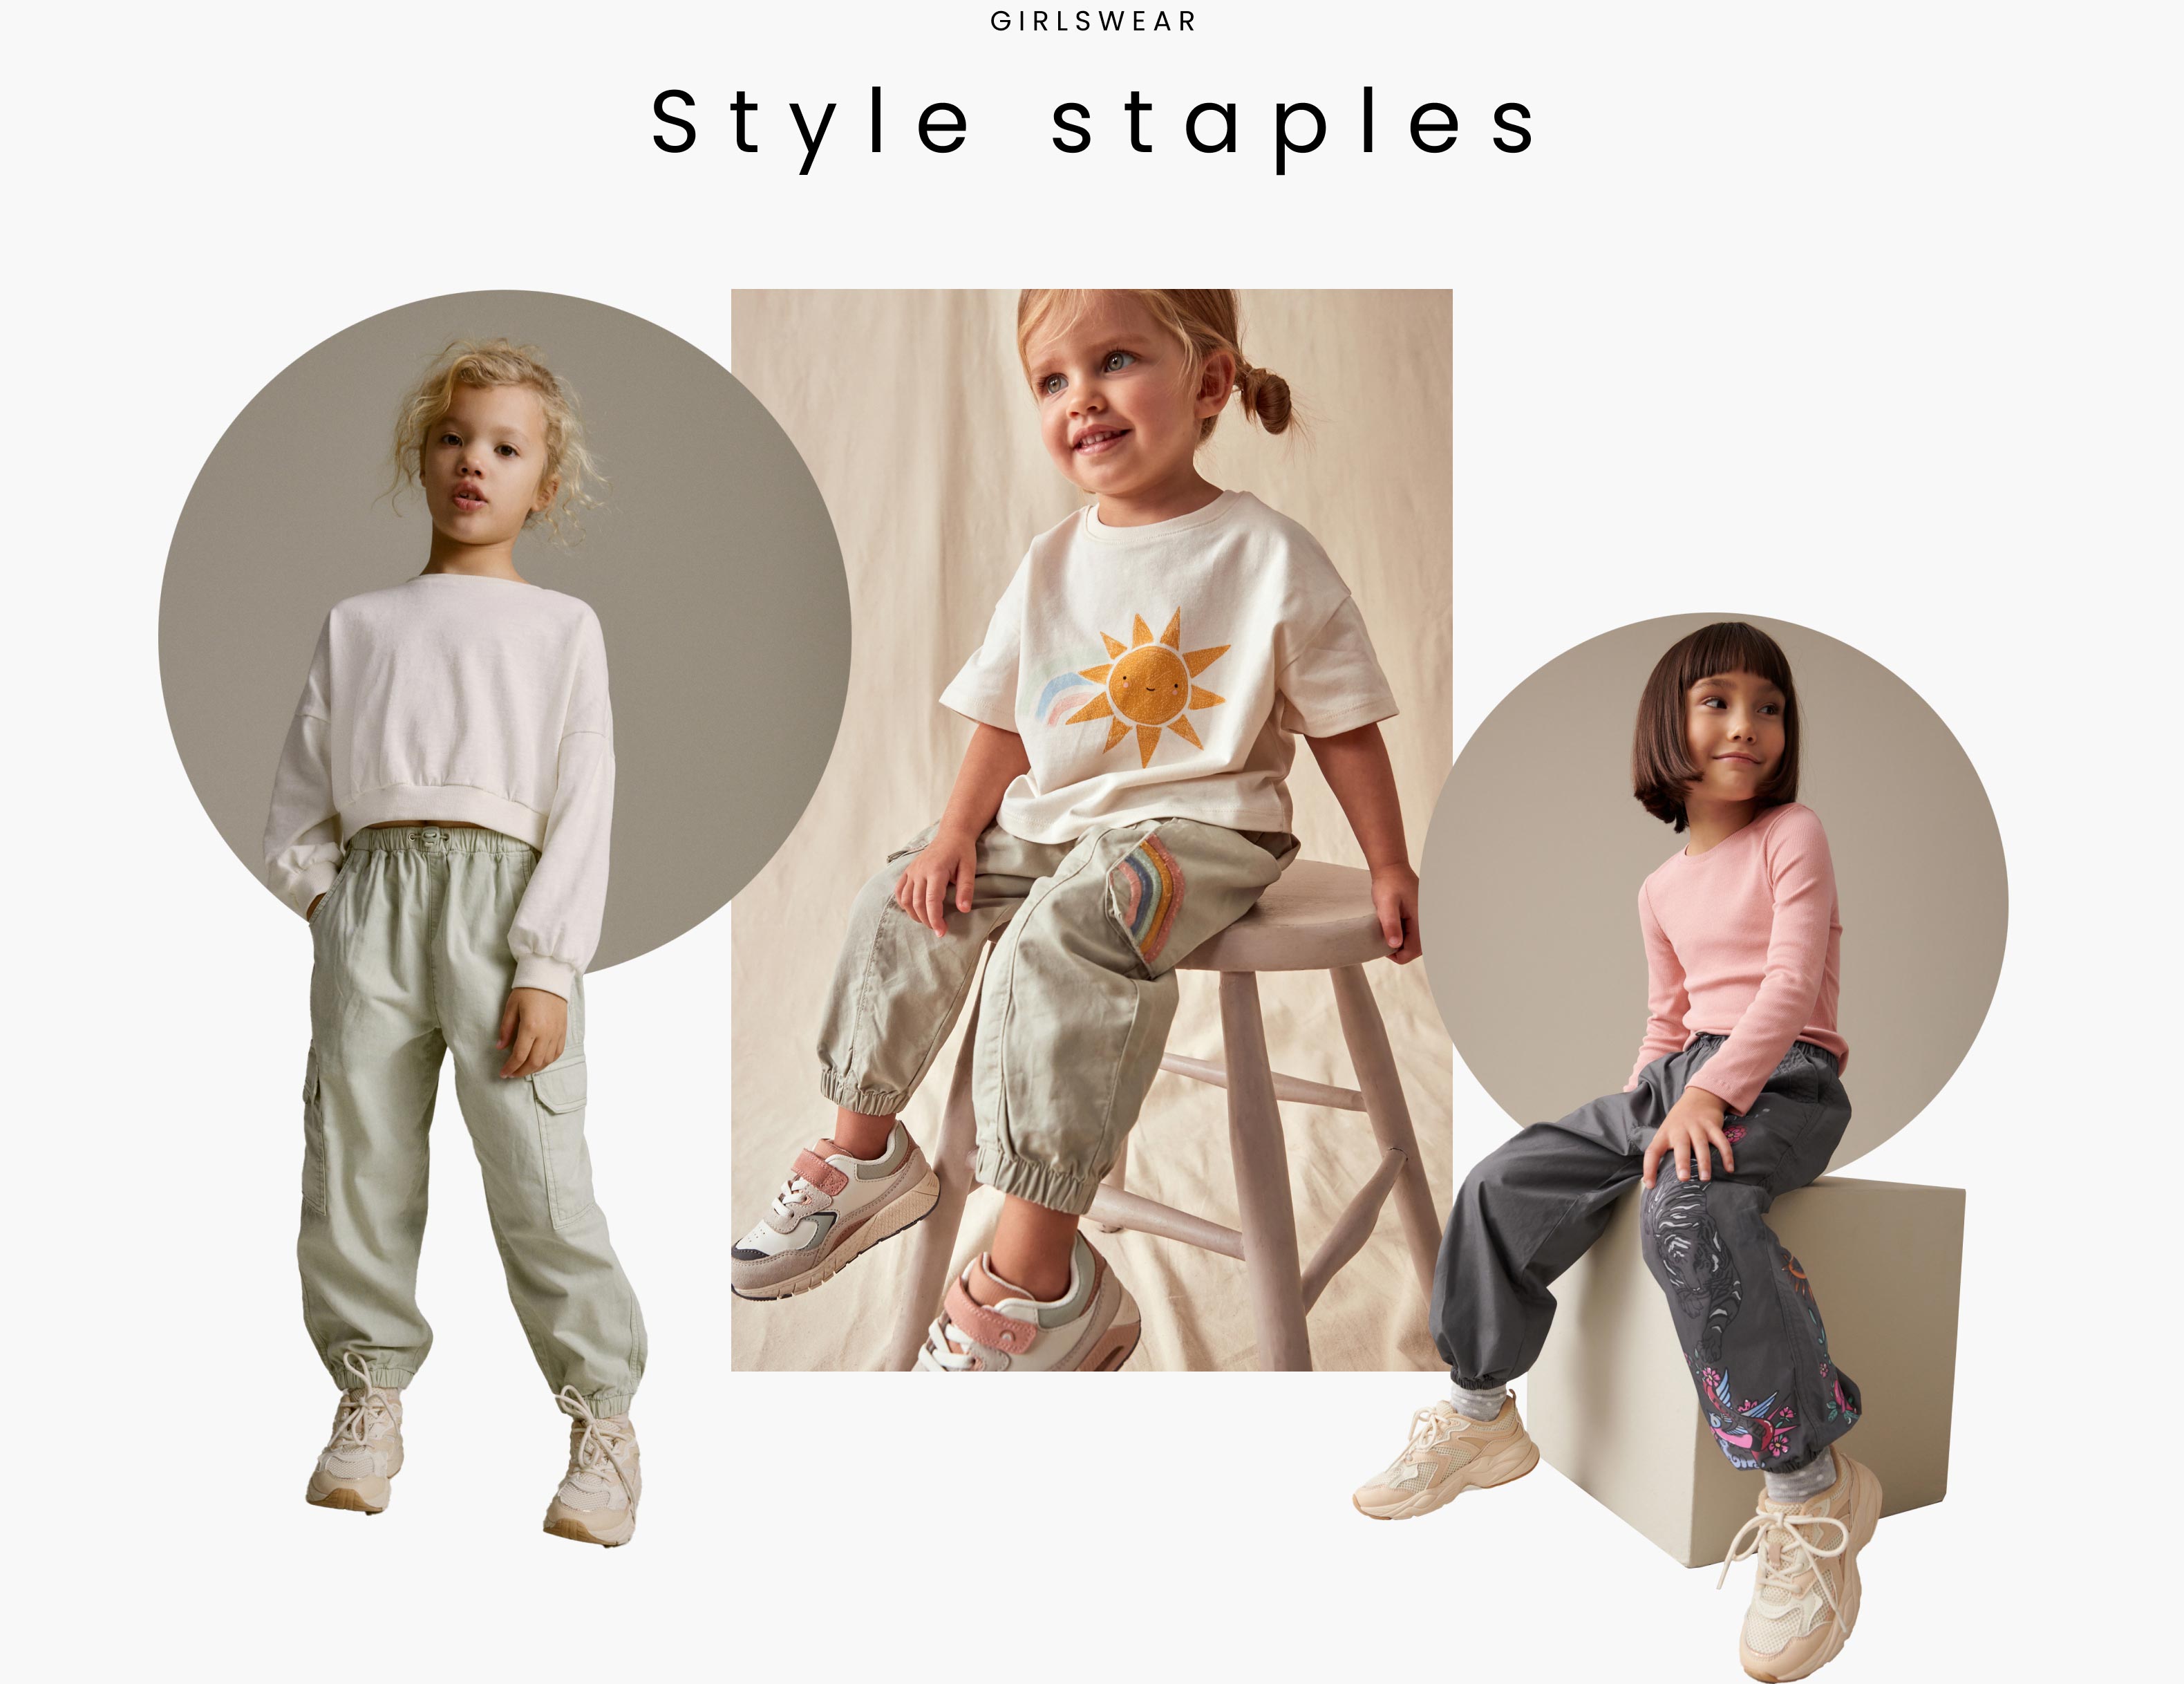 Girlswear - Style staples